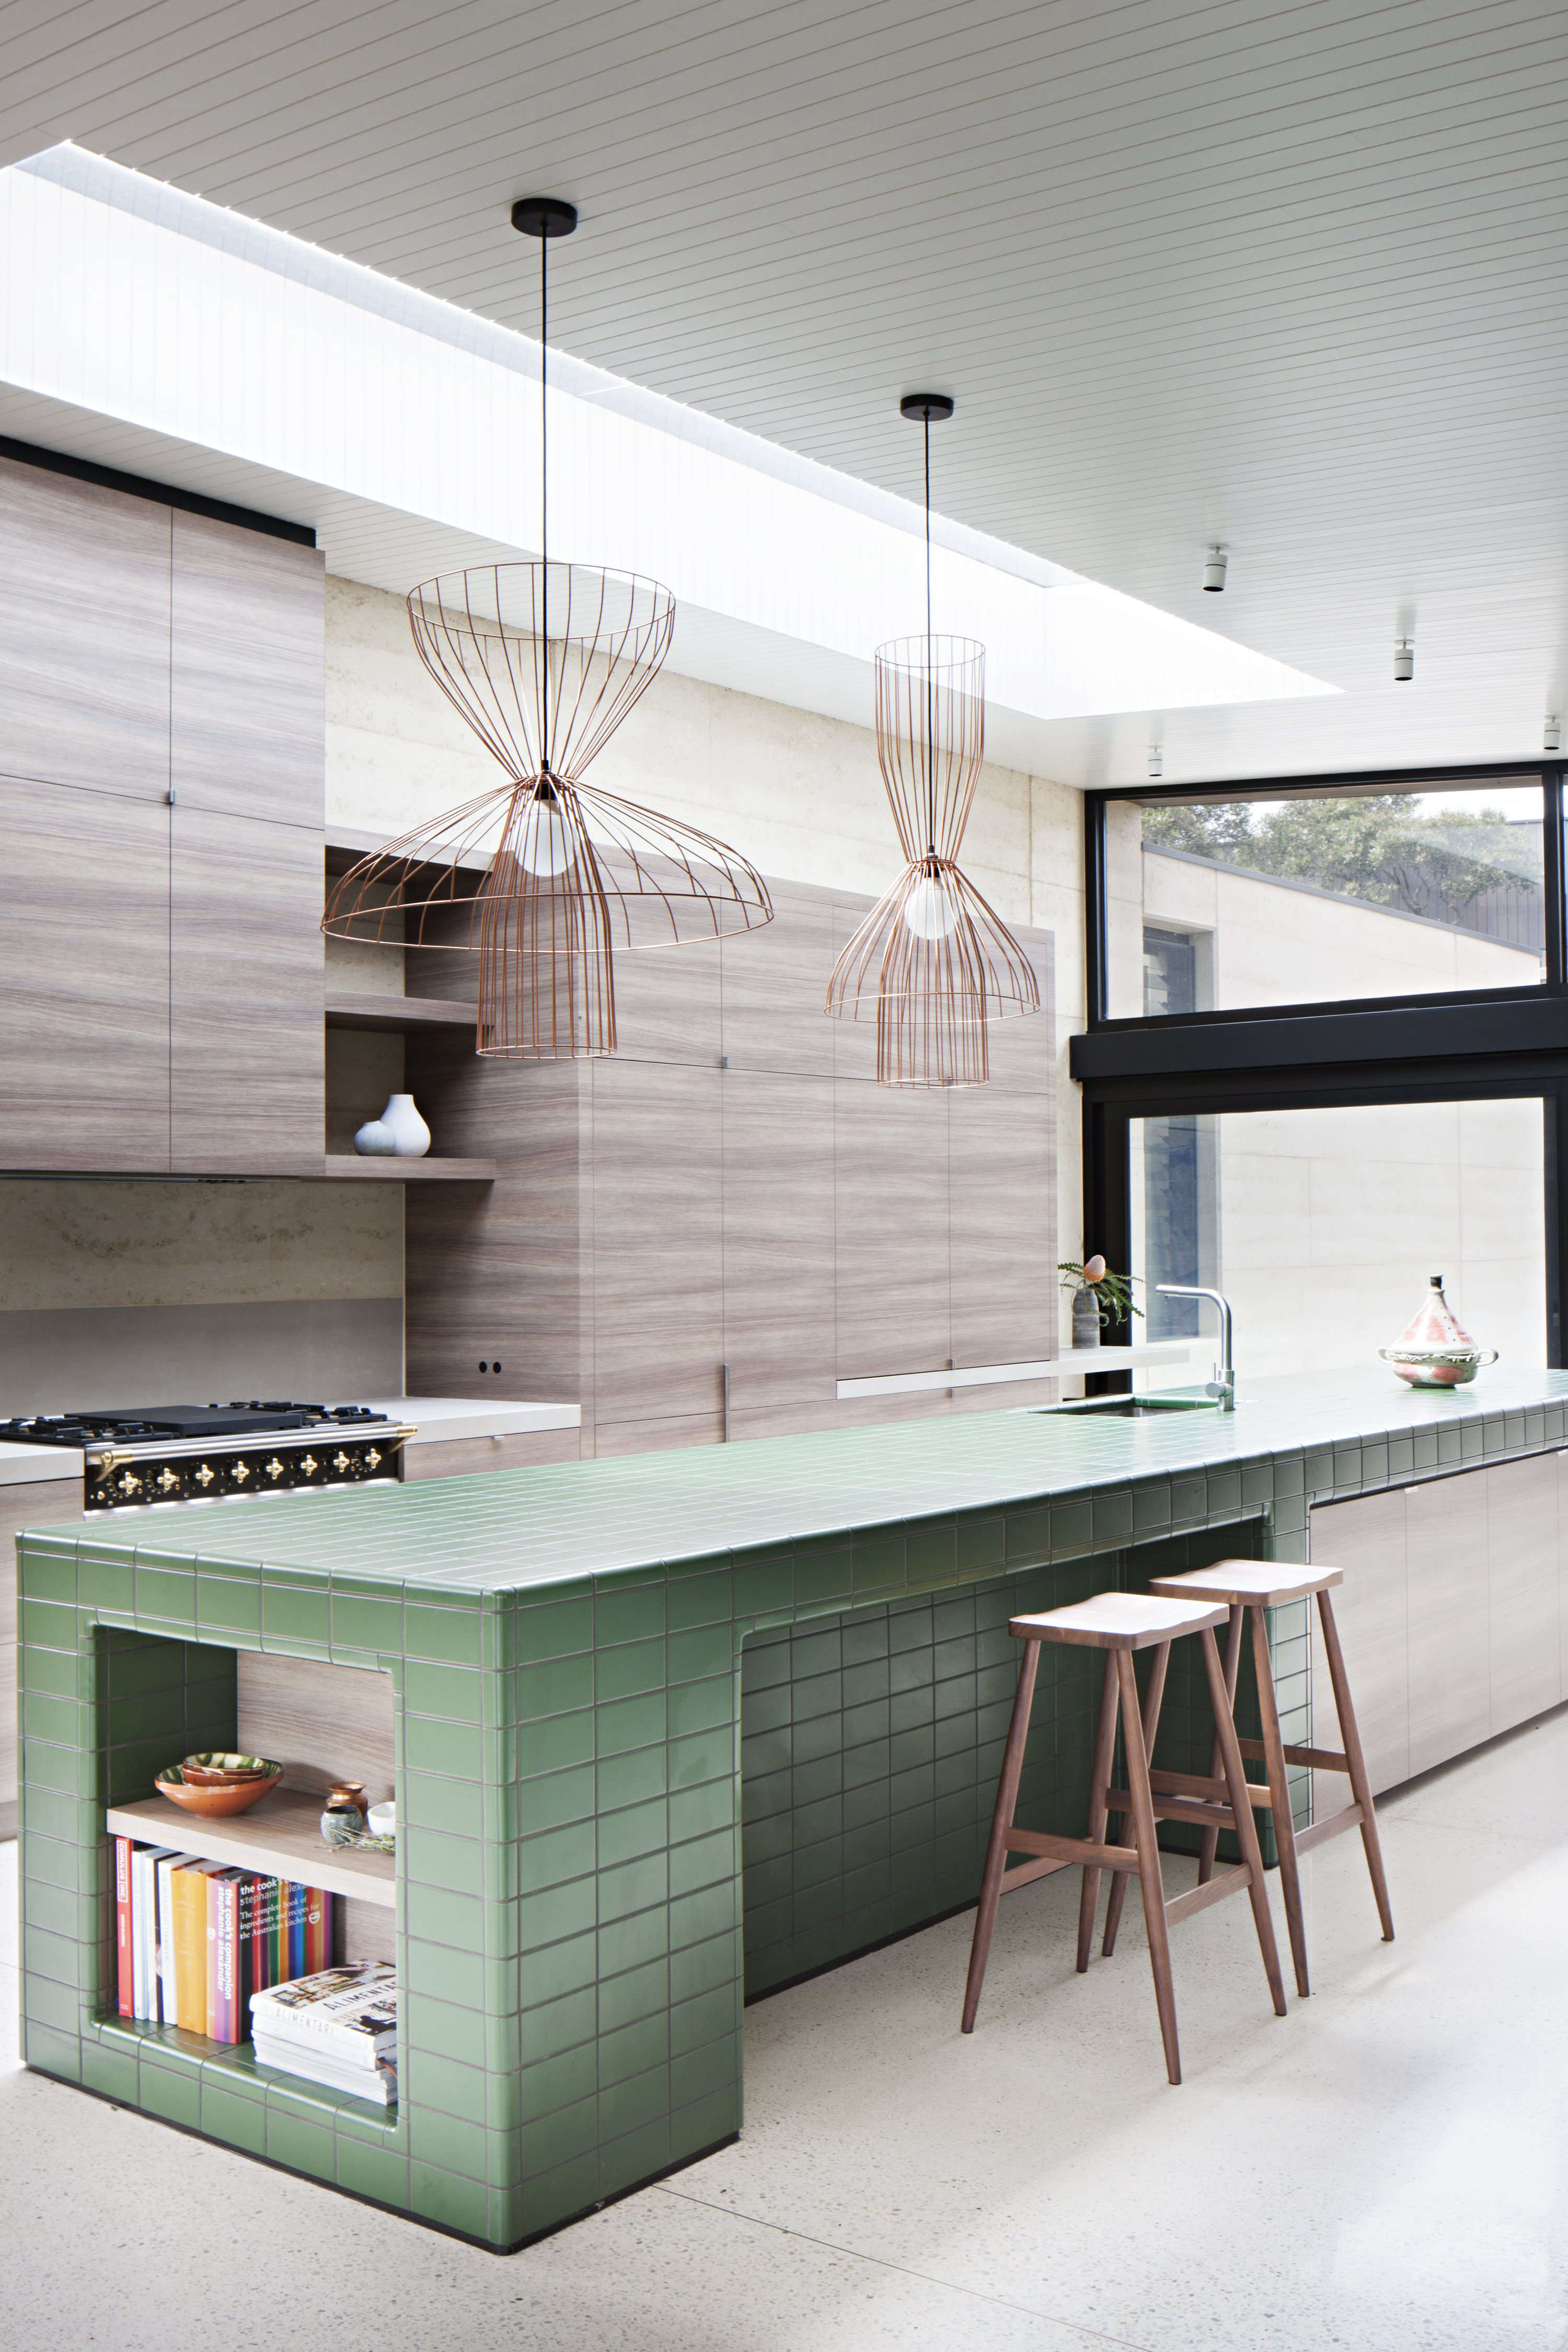 layer house tiled kitchen island australia robertson rak architects shannon mcgrath photo 3